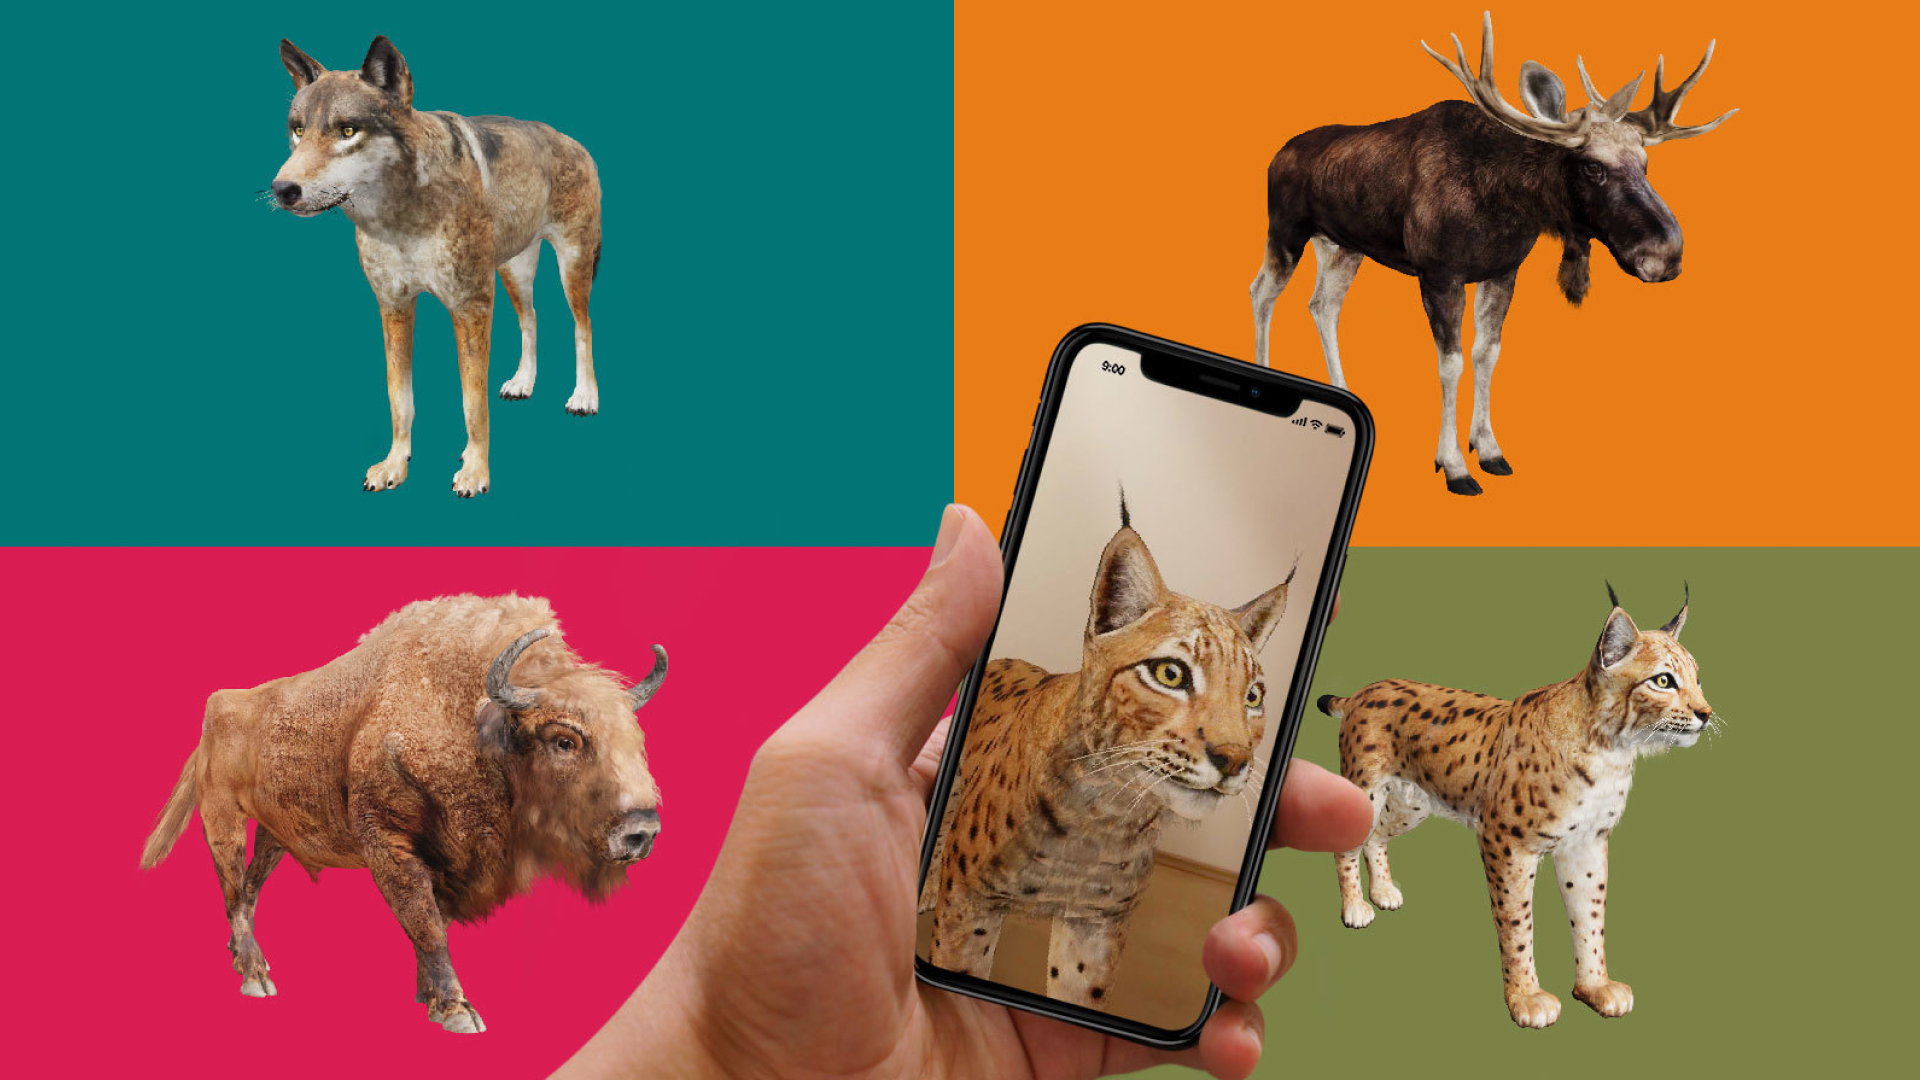 Connecting with Wildlife Through AR